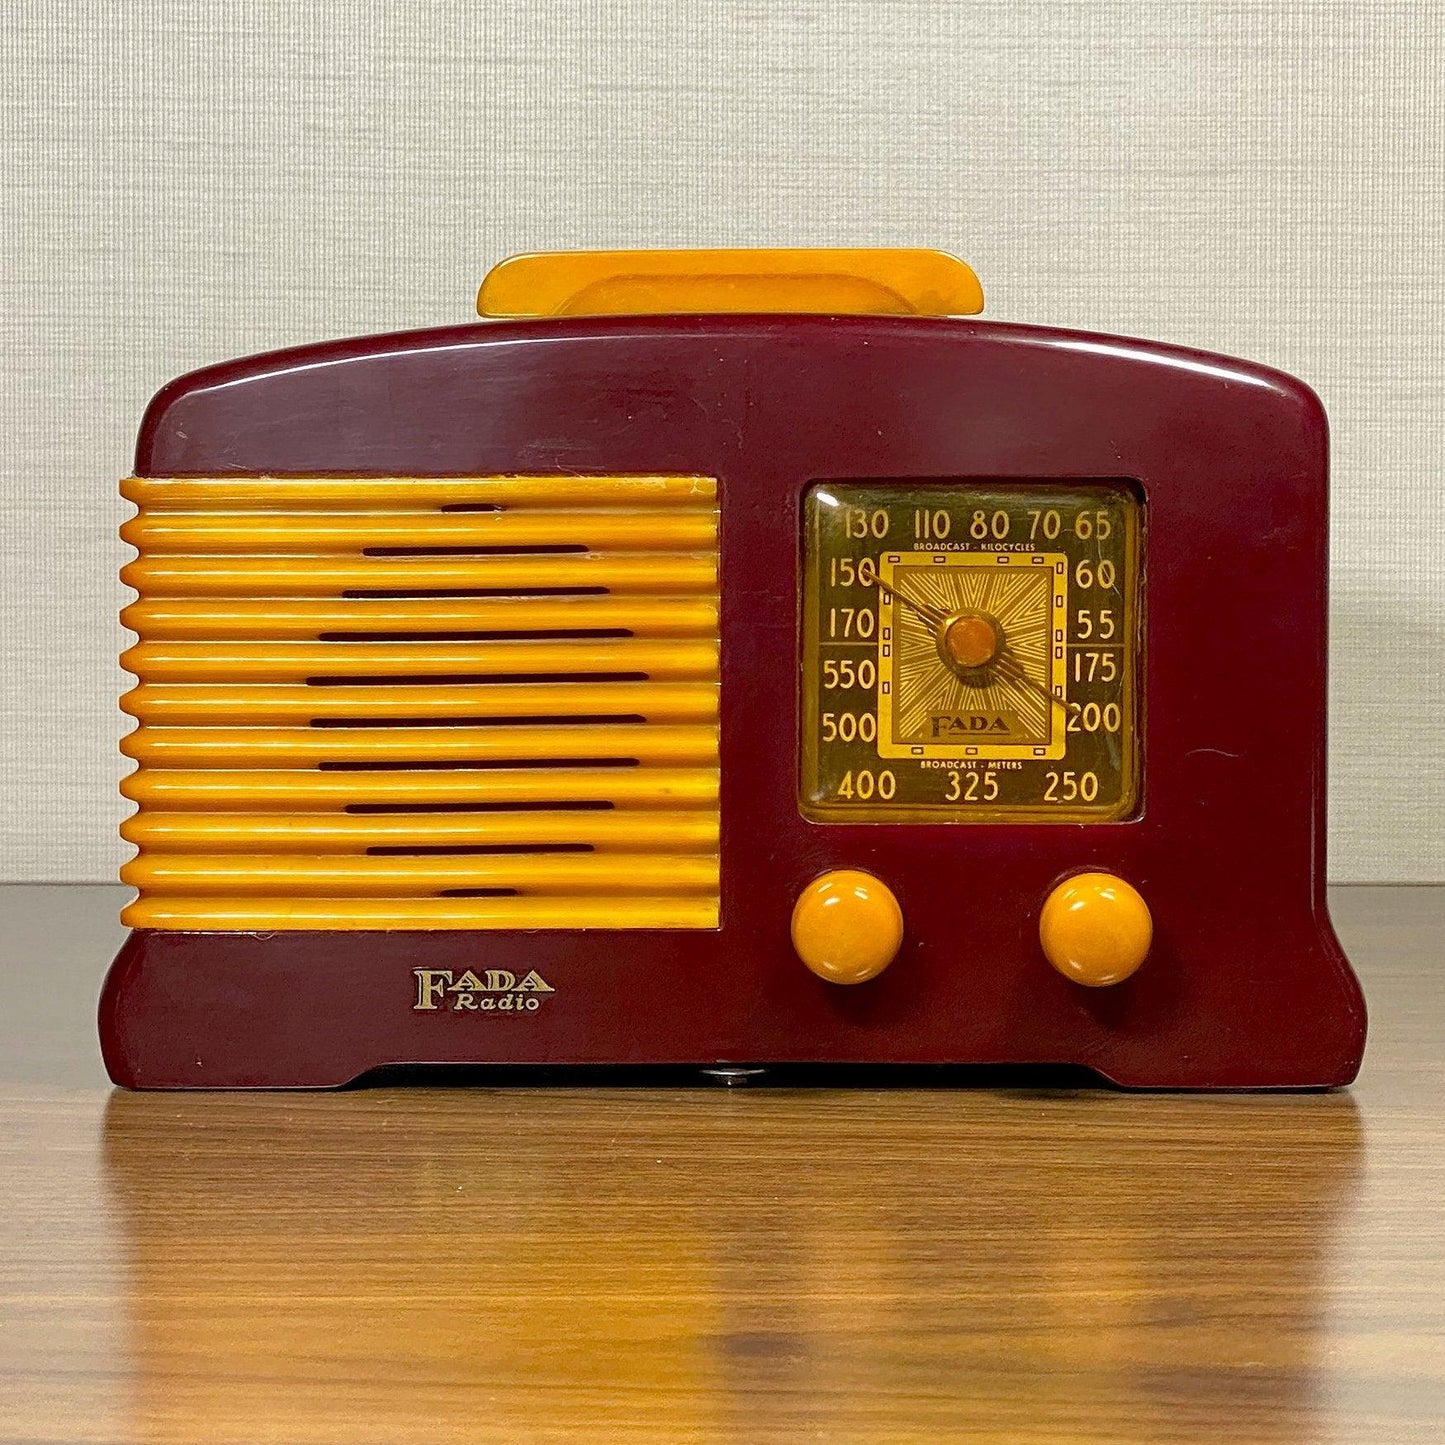 FADA 202 Catalin Radio, Maroon and Butterscotch